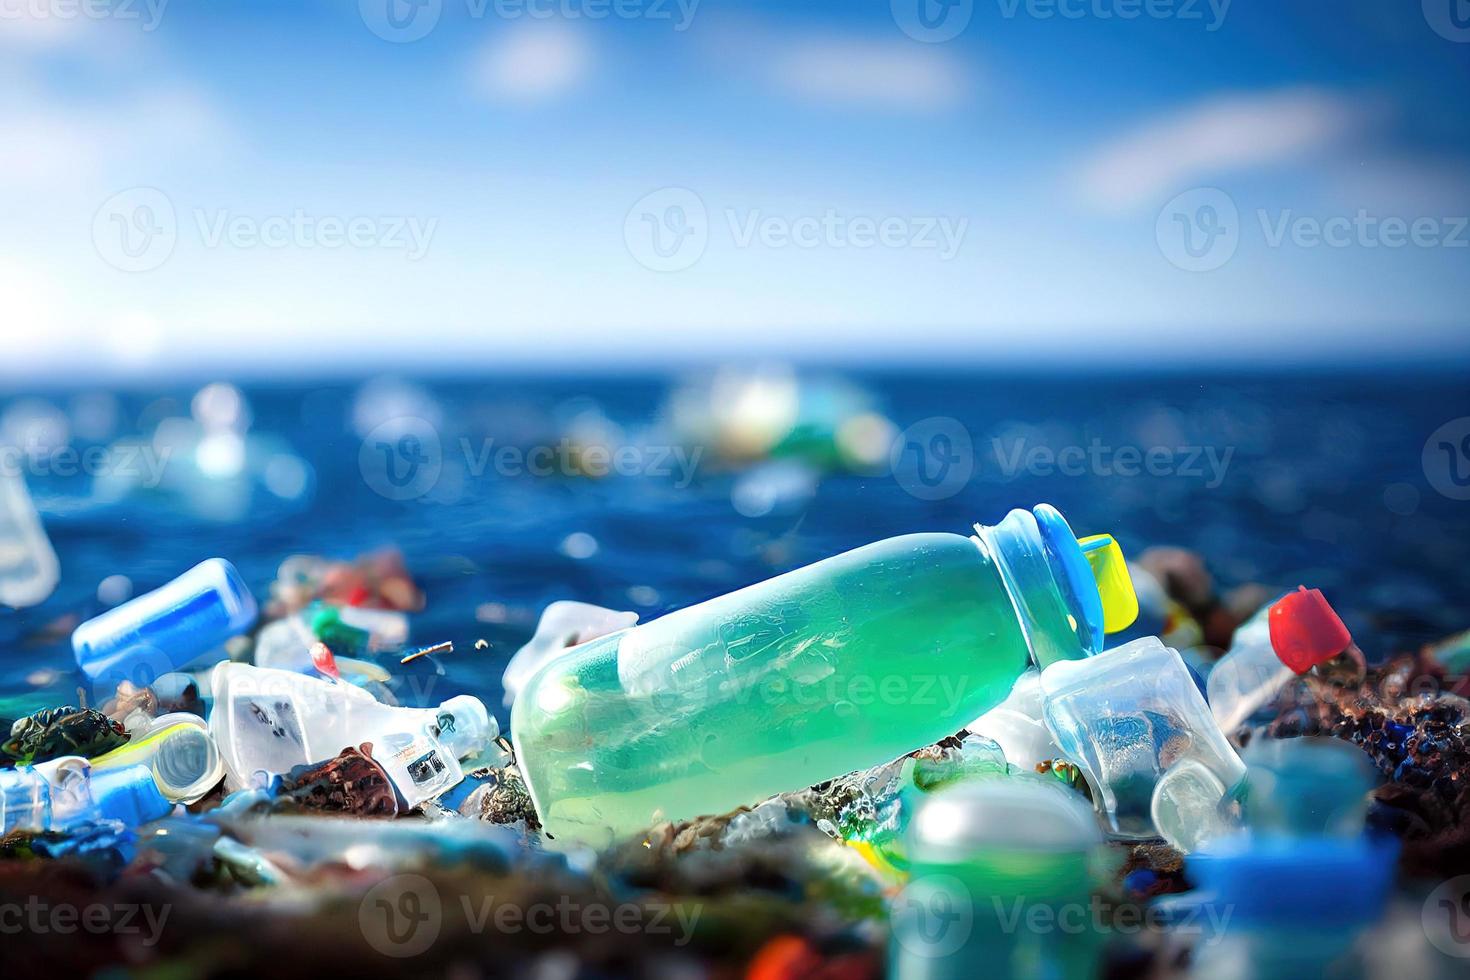 garrafas plásticas problemáticas e microplásticos flutuando no oceano. foto